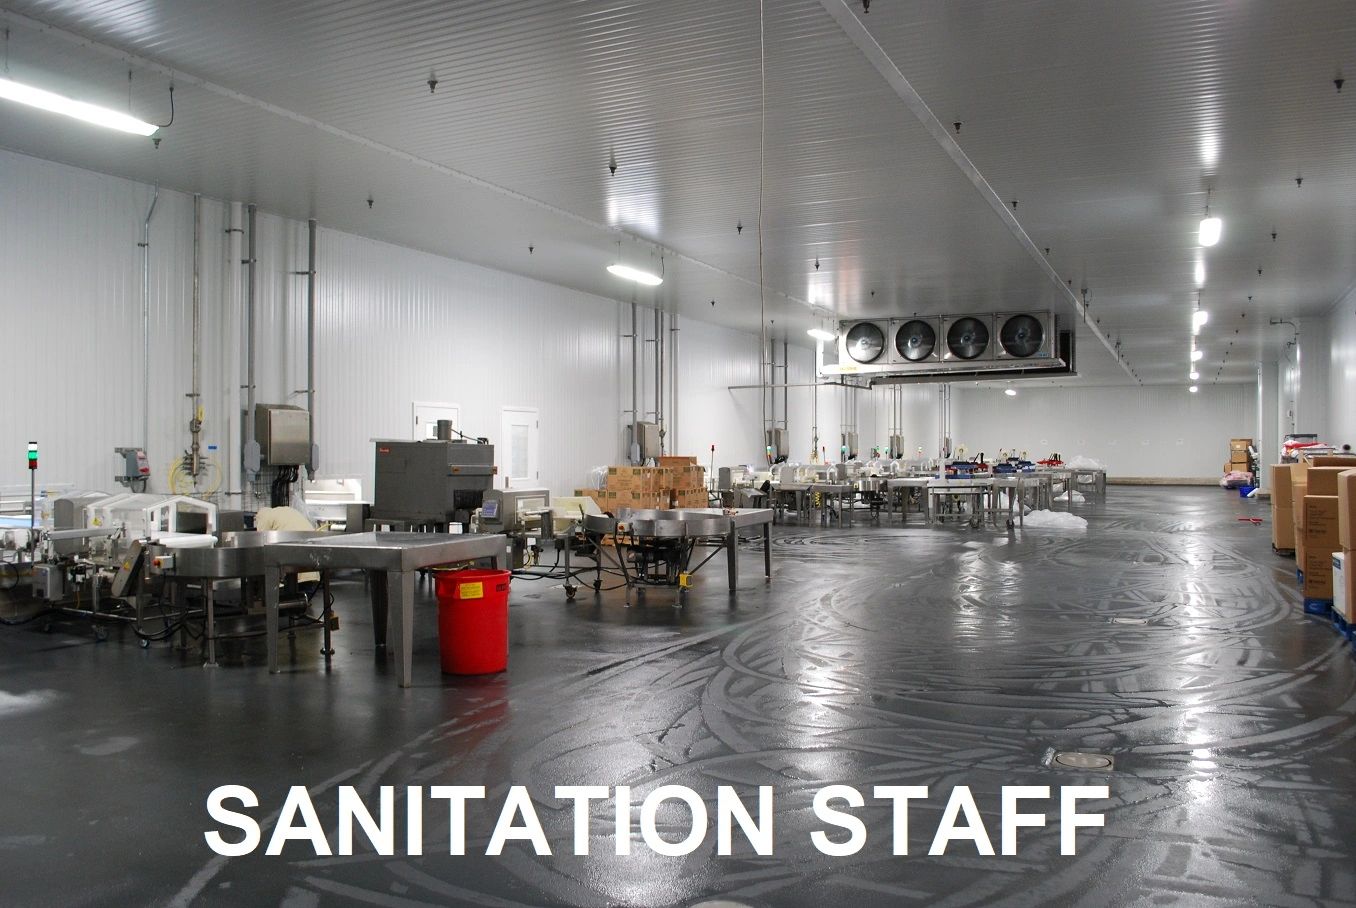 Sanitation positions start at $14.00 per hour